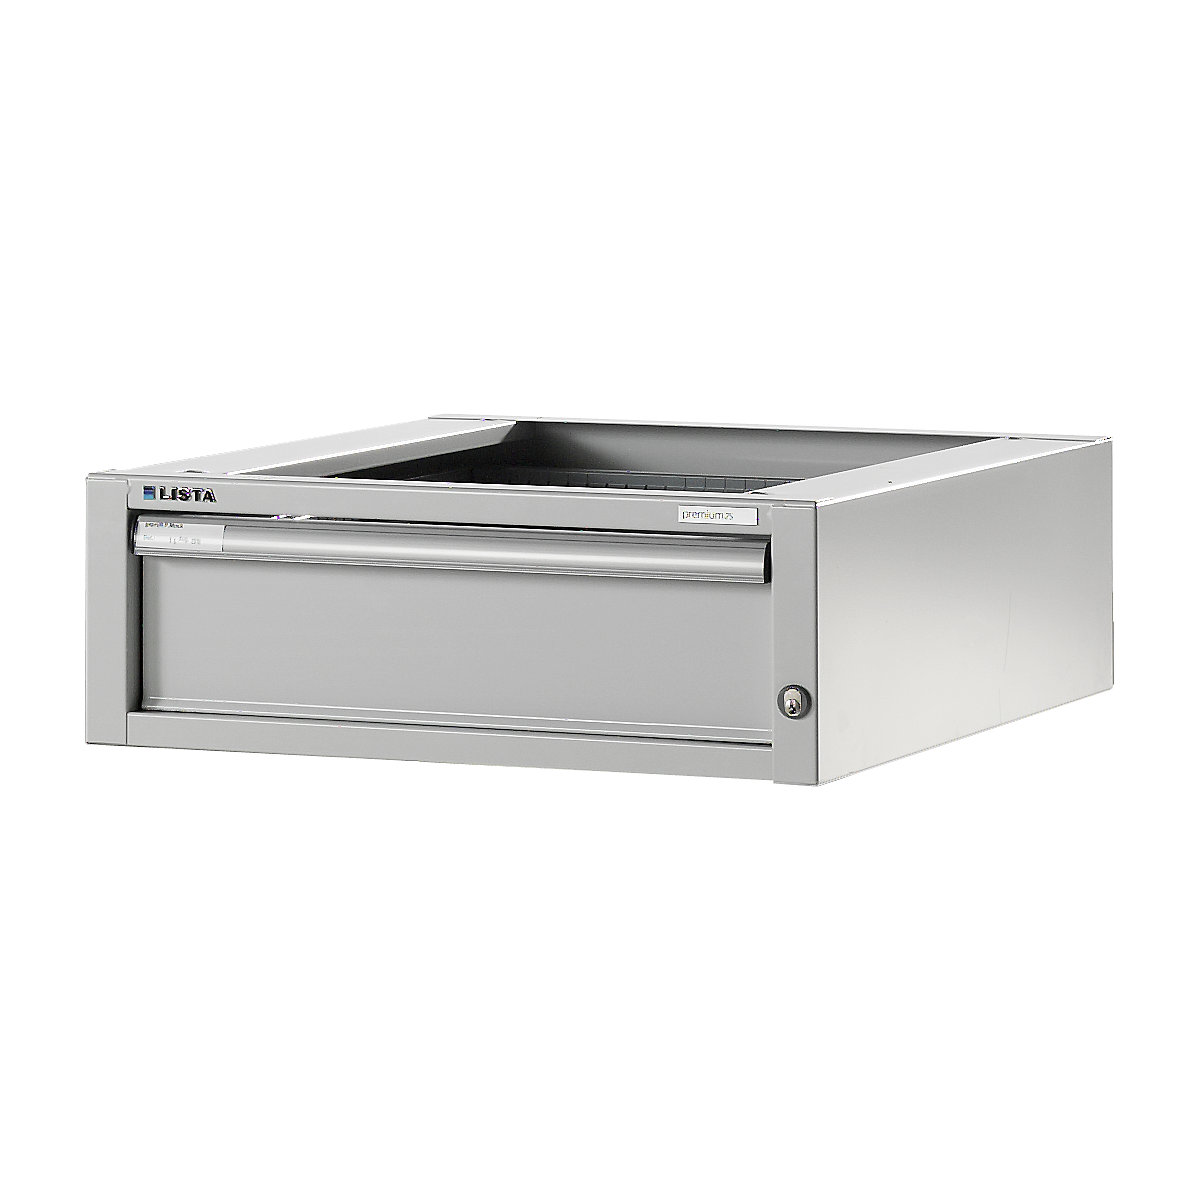 Sistem modular pentru banc de lucru, dulap inferior – LISTA, înălțime 204 mm, 1 sertar, gri deschis-6